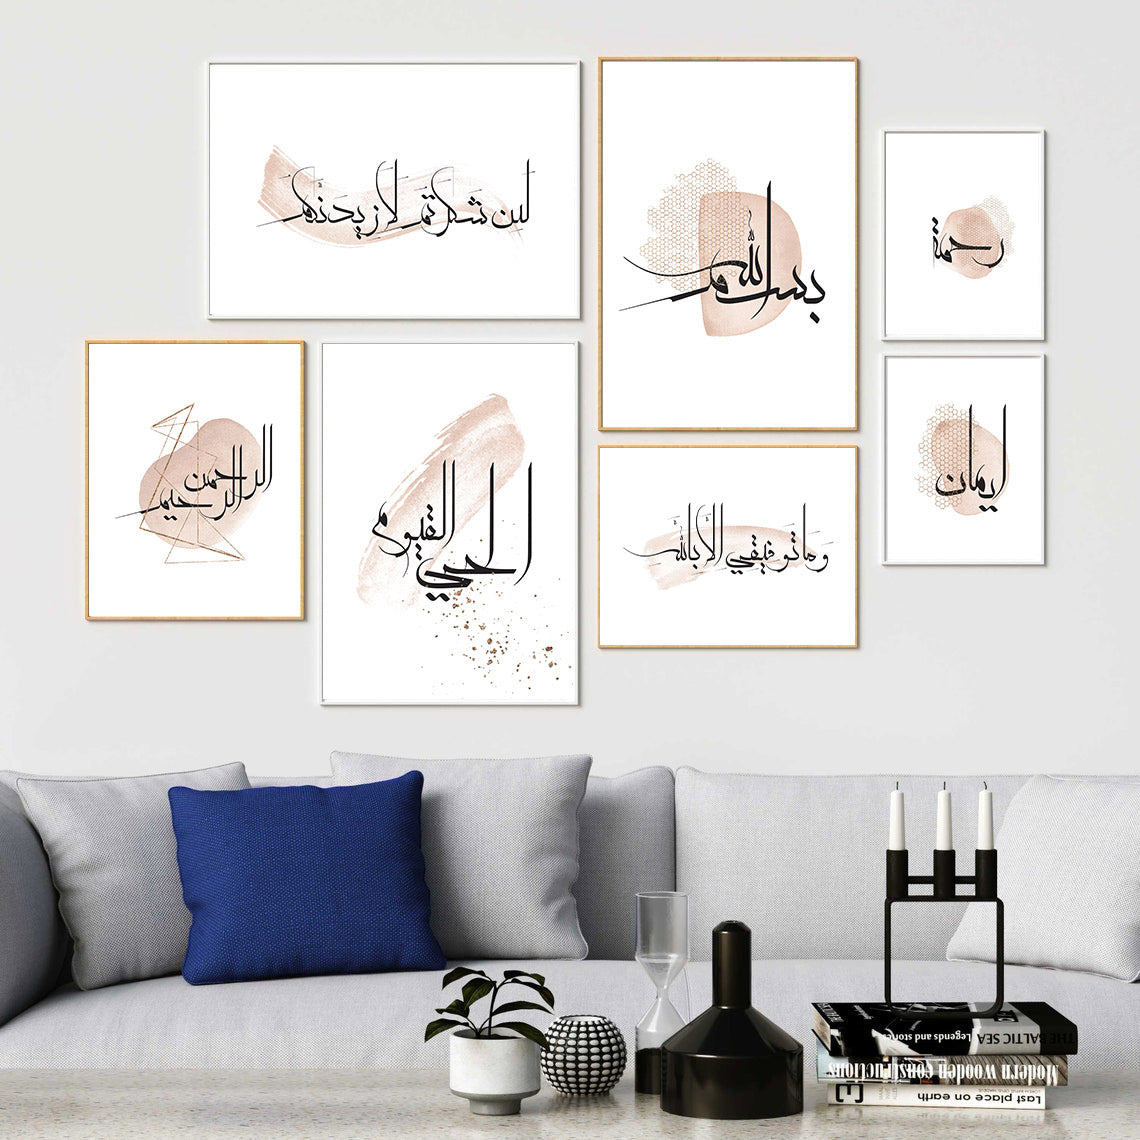 Islamic wall art, Set of 7 Arabic wall art, Modern Islamic Wall decor printable, Islamic Calligraphy, Muslim Home Decor, Islamic gift - islamicwalldecors